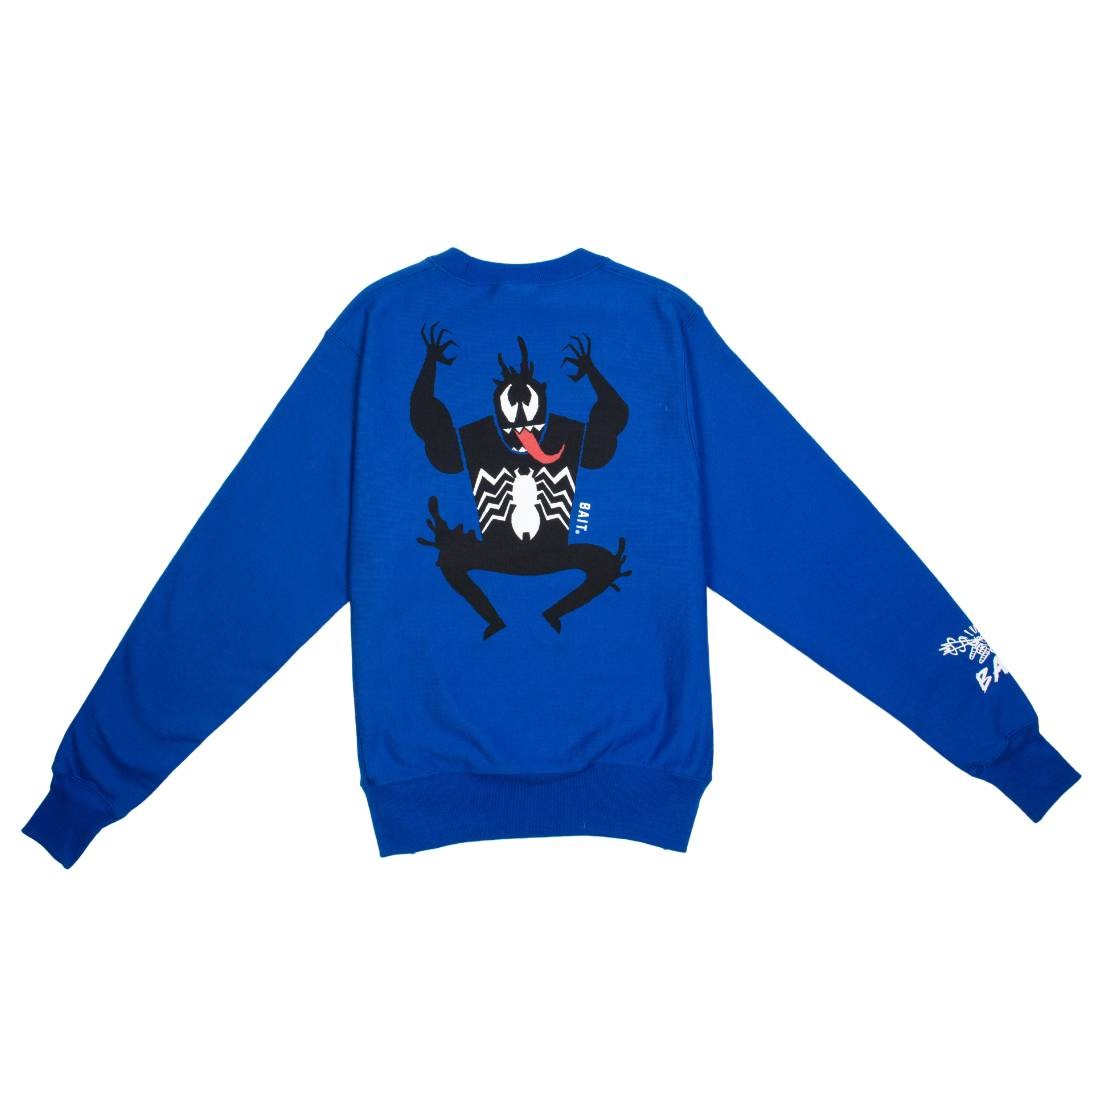 BAIT x Spiderman x Champion Men Spiderman Villains Crewneck Sweater blue the web